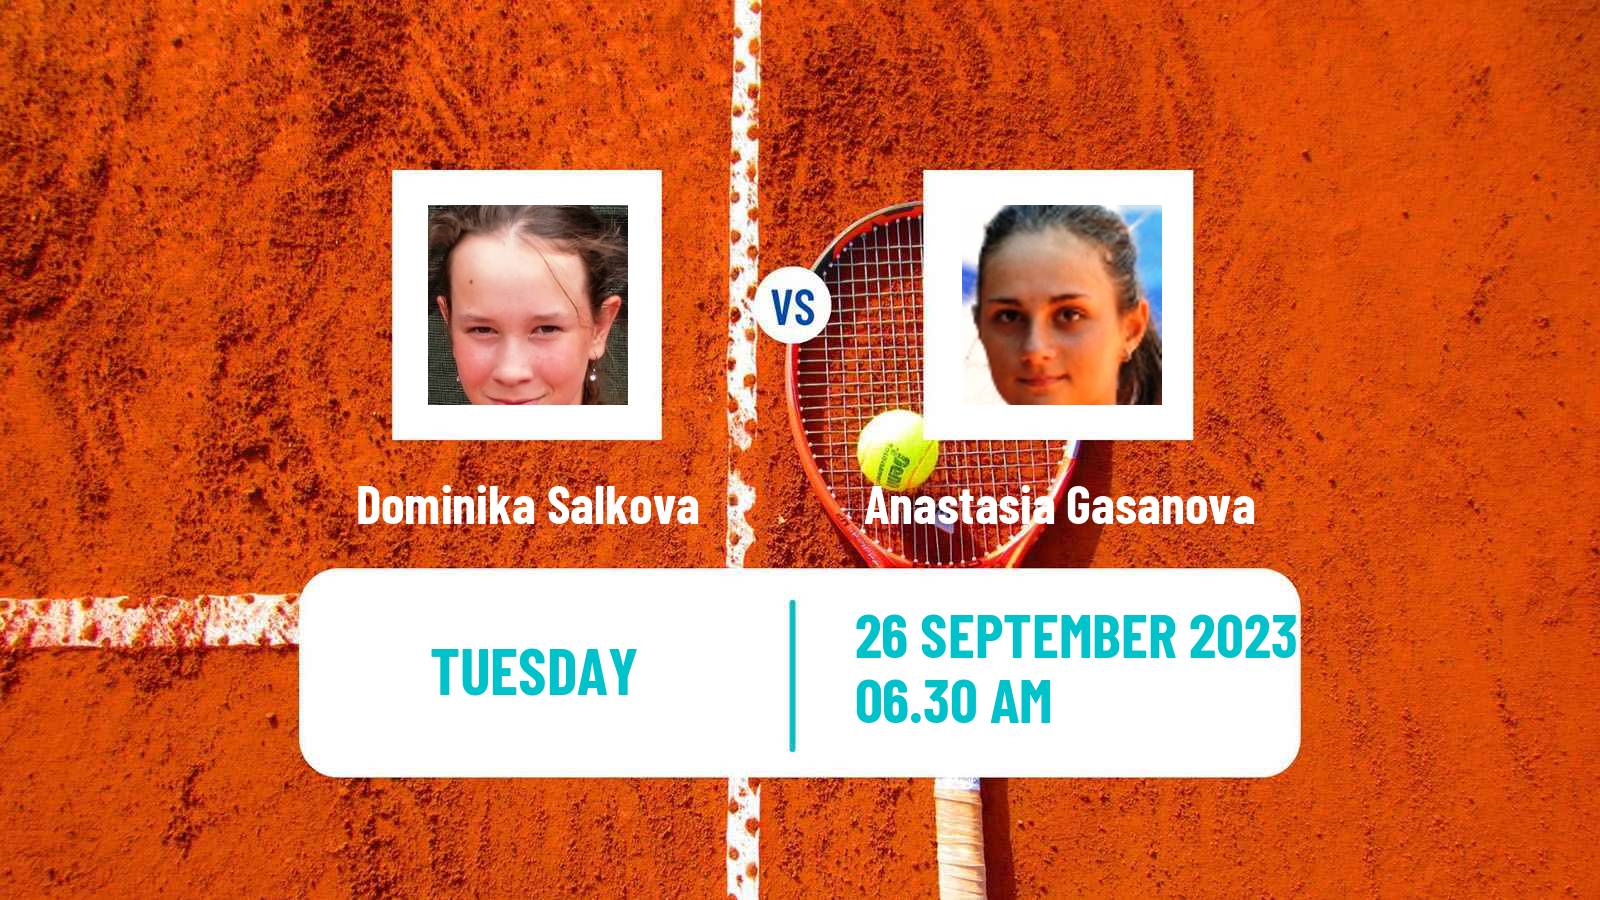 Tennis ITF W40 Kursumlijska Banja Women 2023 Dominika Salkova - Anastasia Gasanova